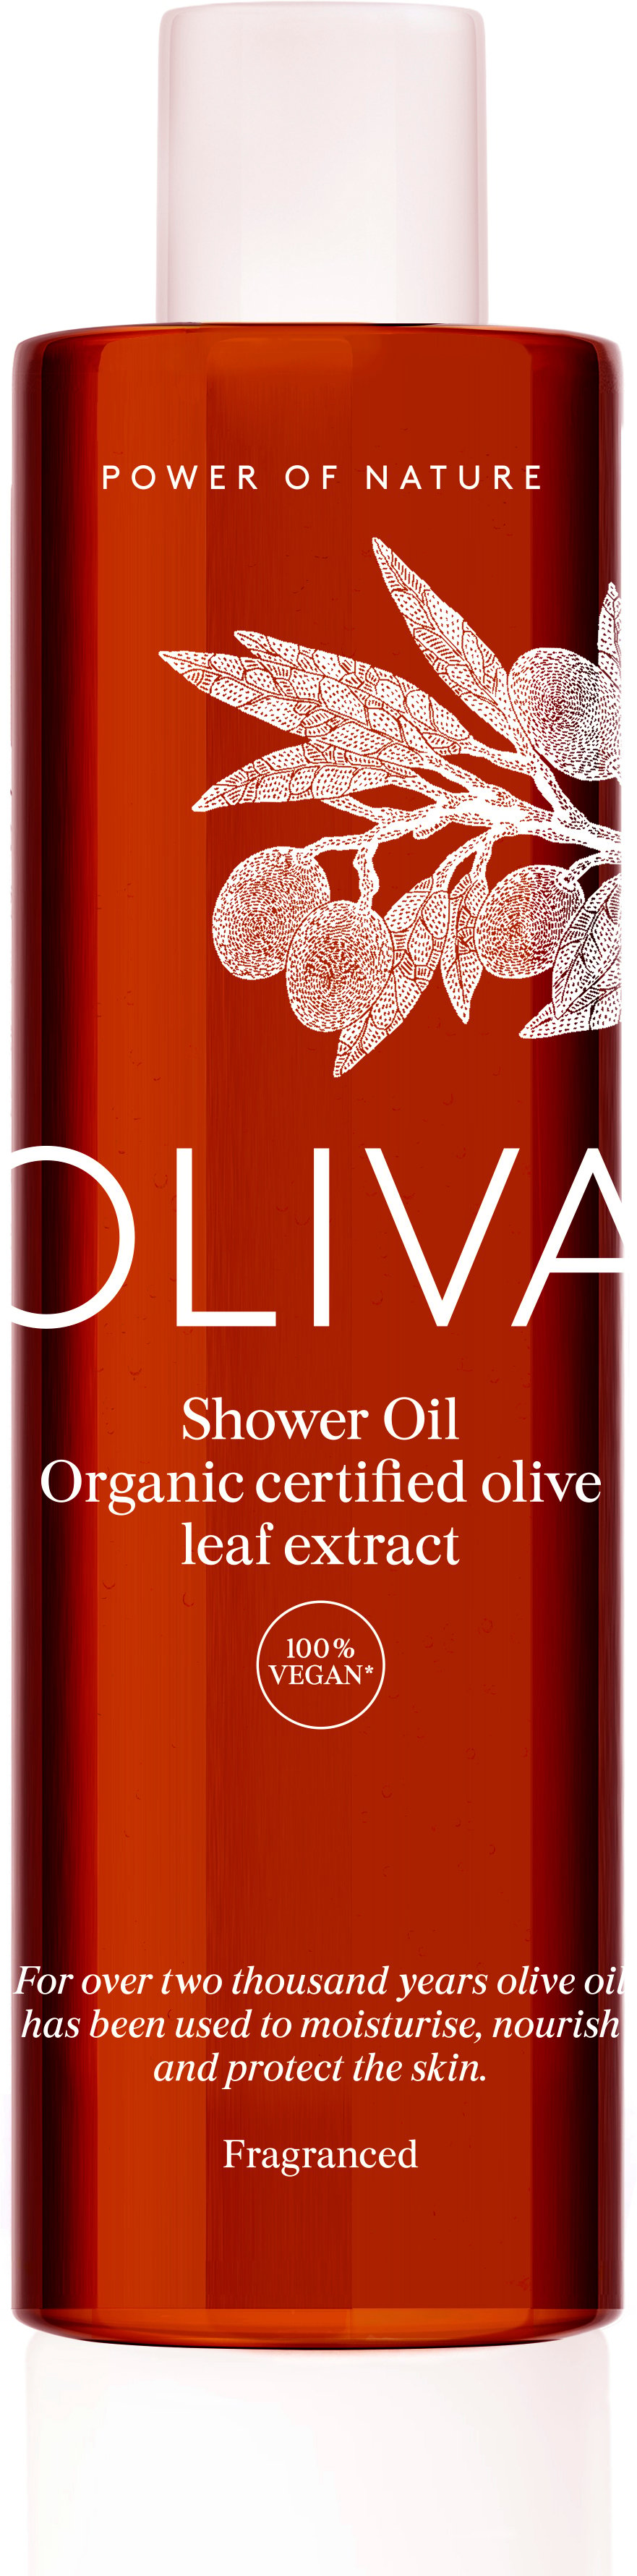 Oliva Shower Oil Parfymerad 250 ml